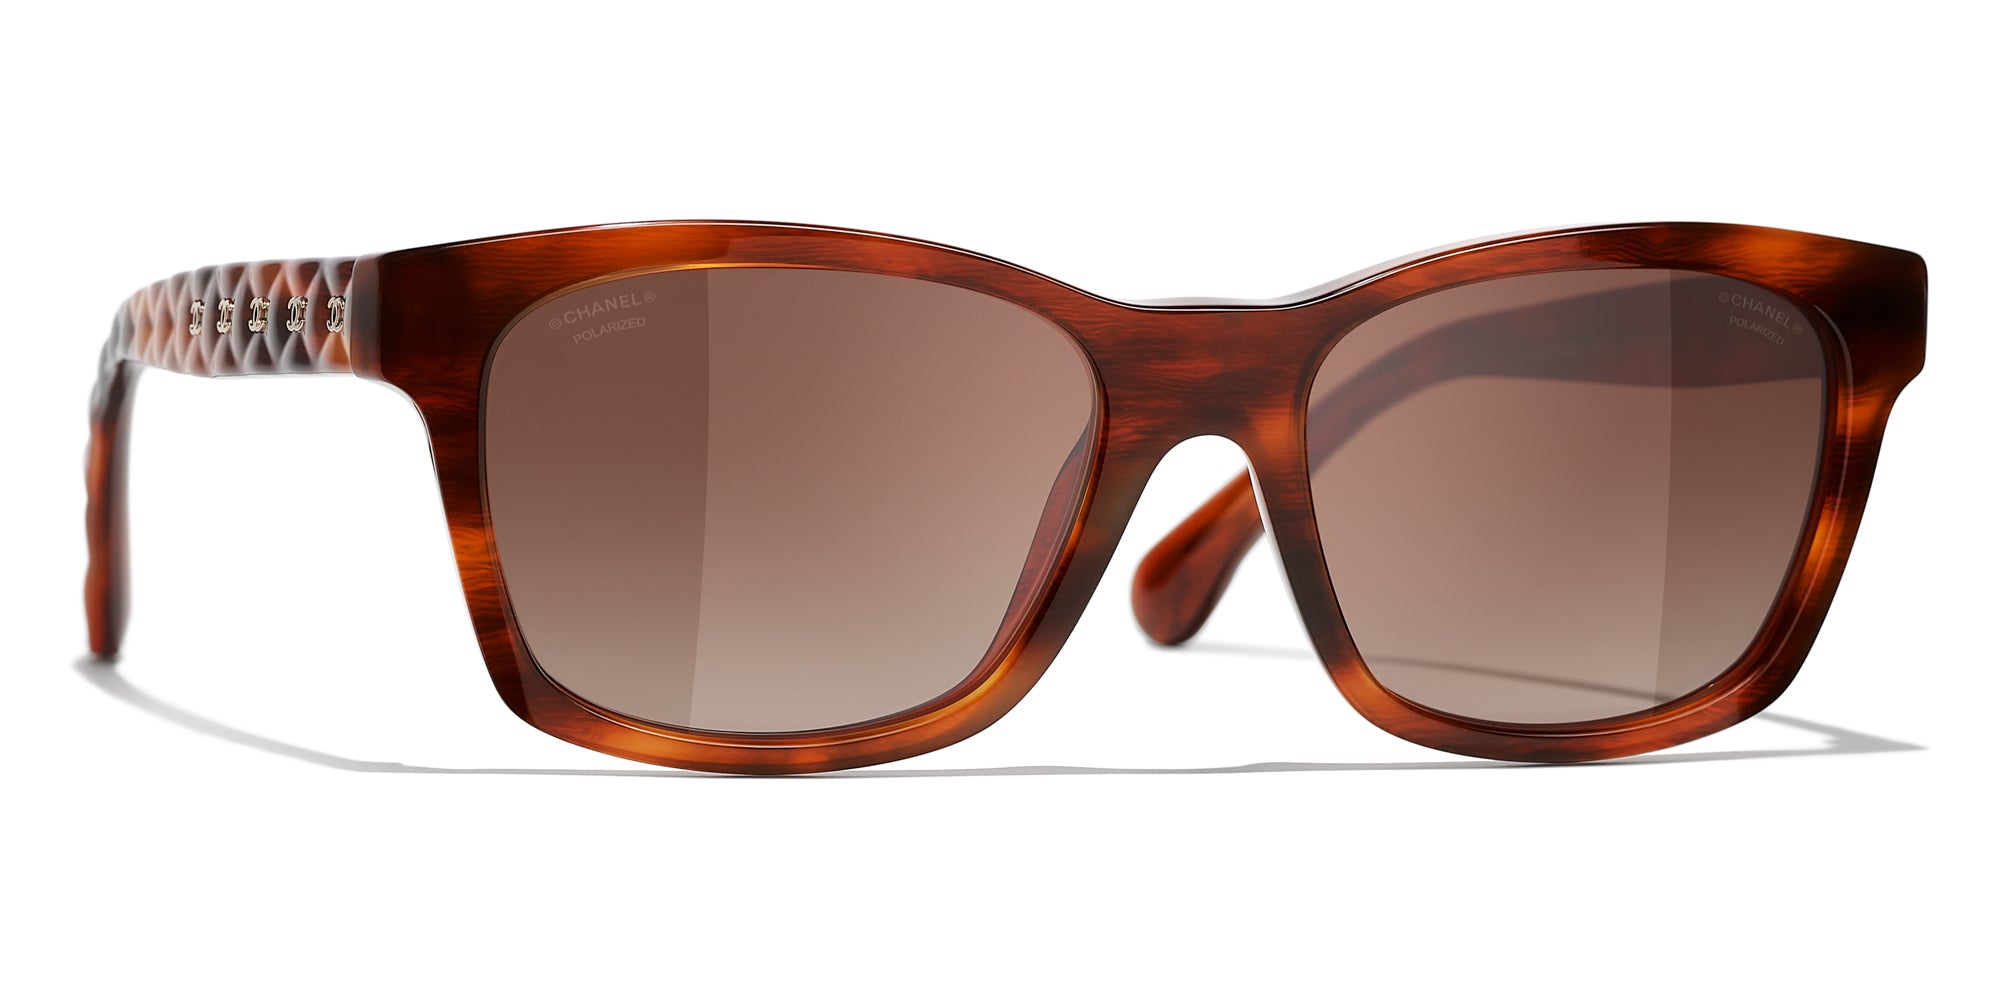 CHANEL Unisex Square Sunglasses  Trending sunglasses, Chanel